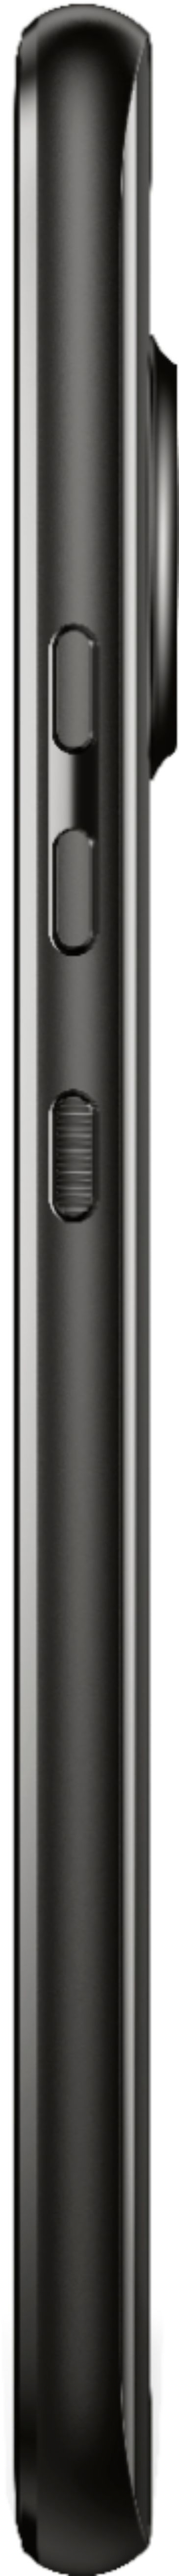 Buy: Motorola Moto X (4th Generation) with 64GB Memory Phone (Unlocked) Super Black